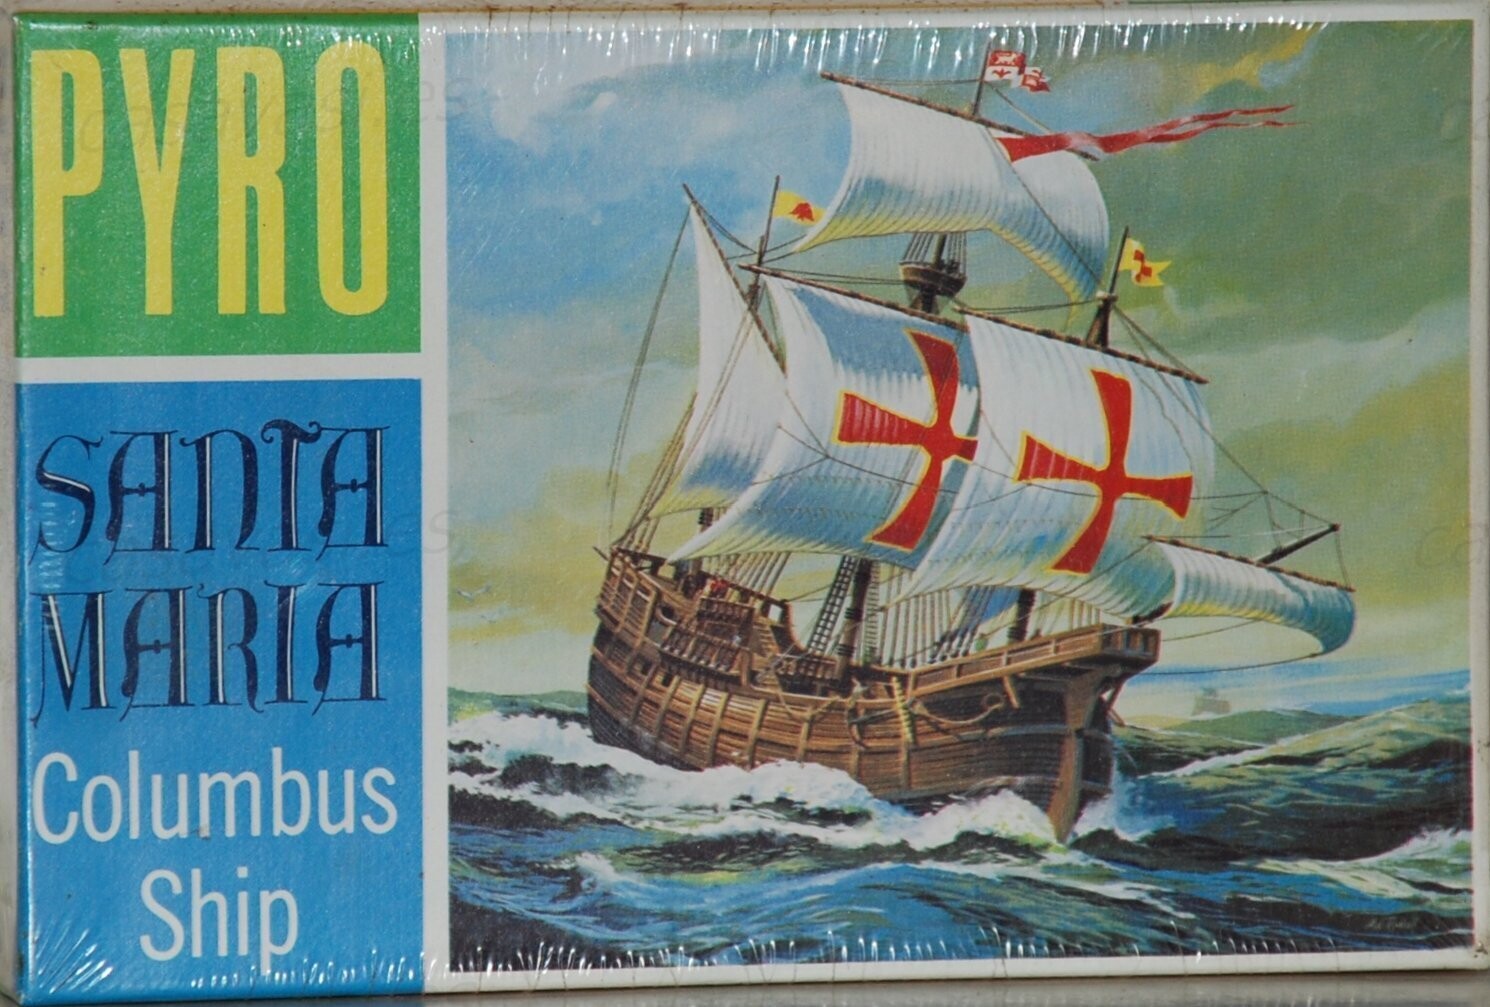 Pyro - b314-75 - Nº4 - 1967 - Santa Maria - Columbus Ship
Box Size 18.5 x 12 cm.